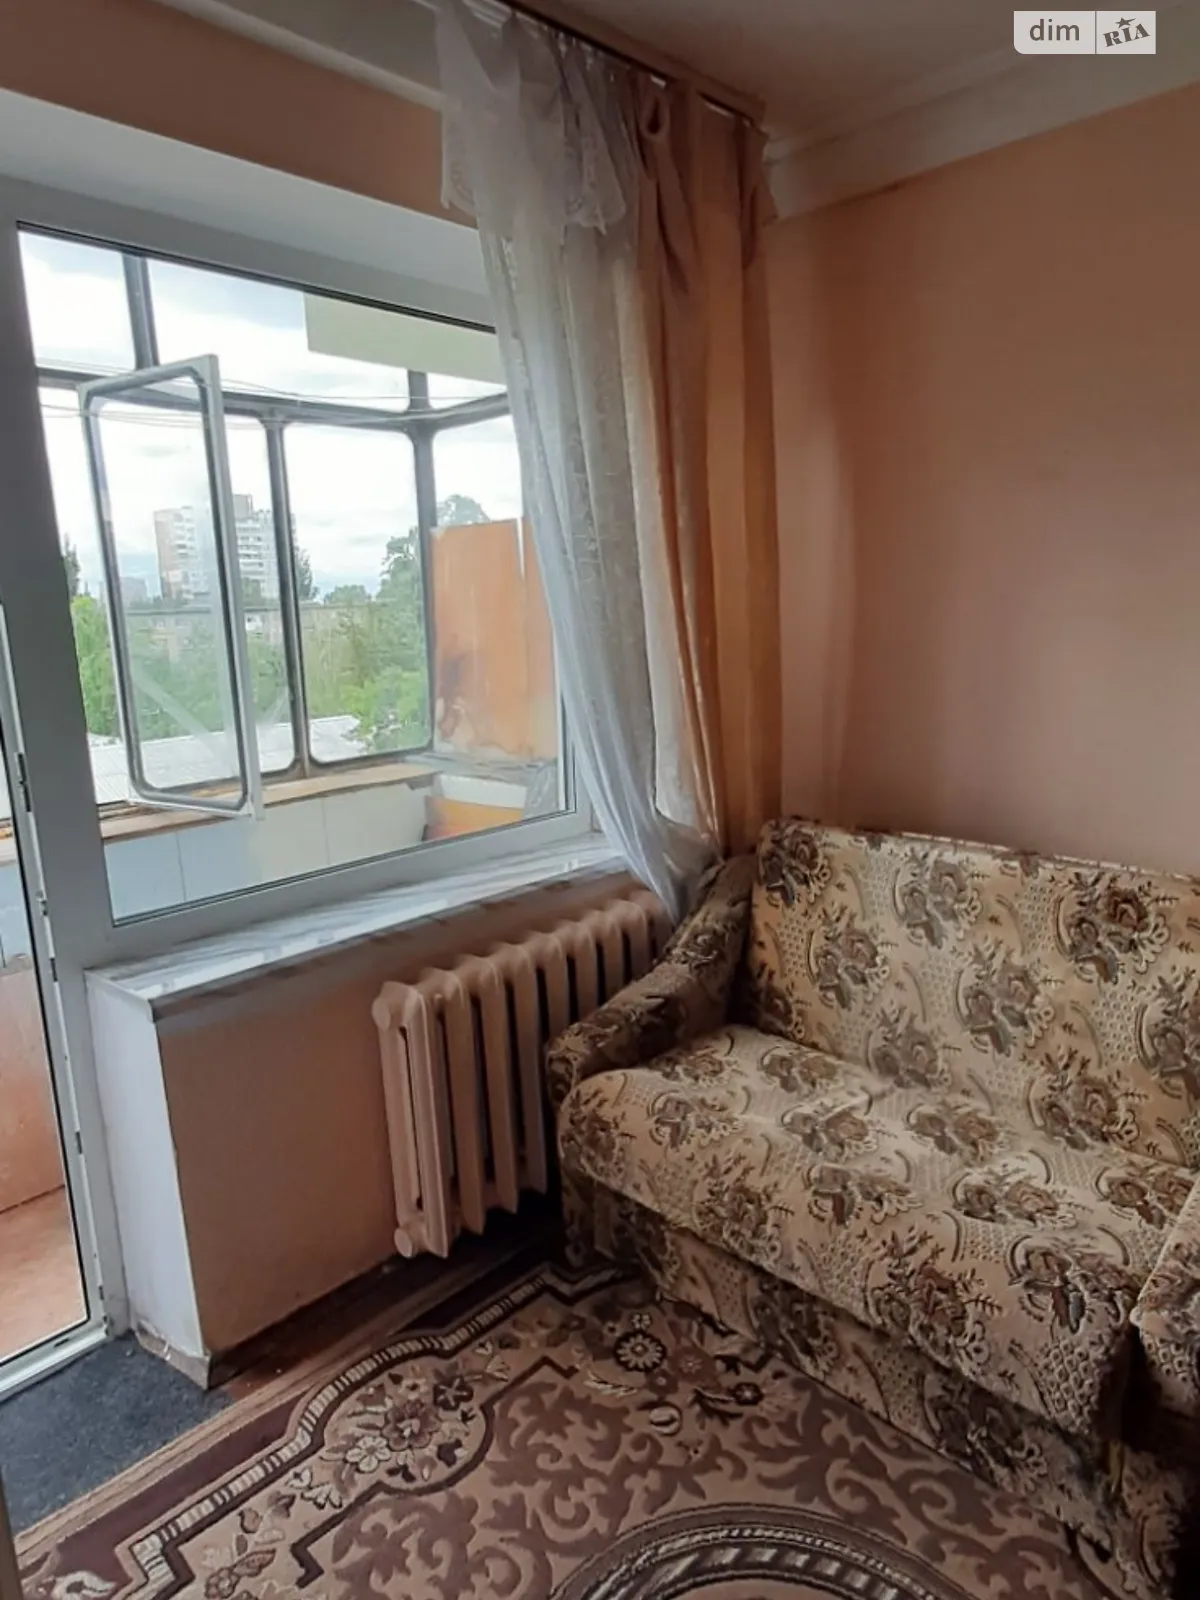 Продается комната 23.6 кв. м в Киеве, цена: 13000 $ - фото 1